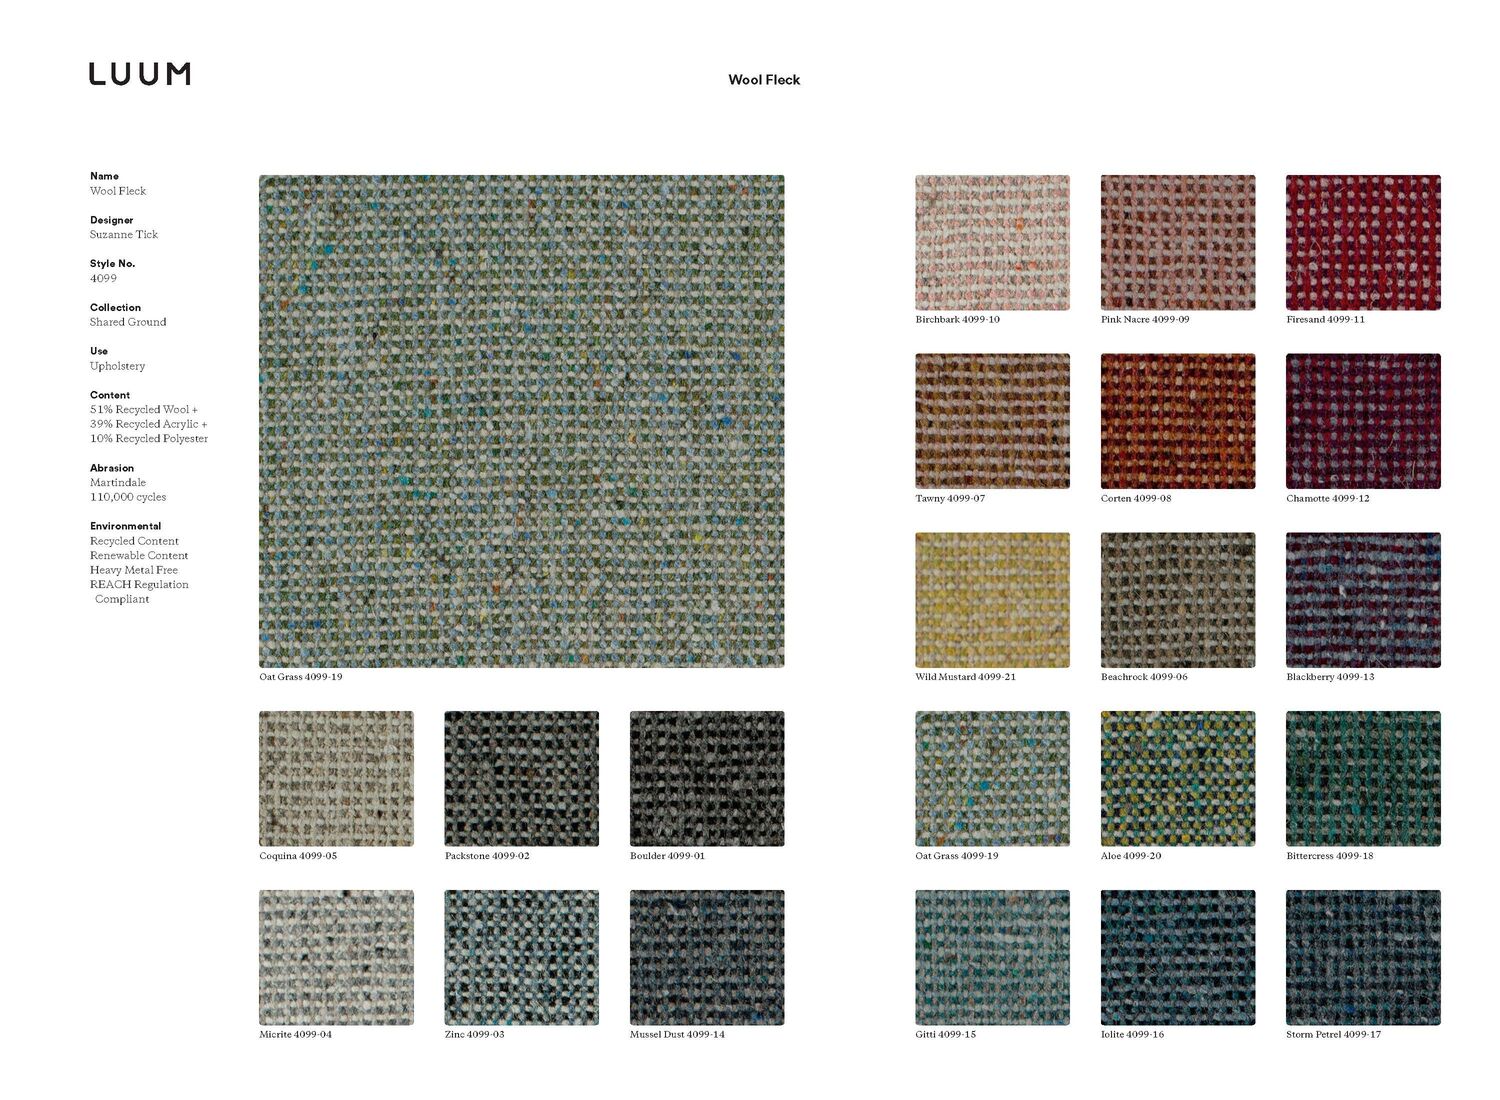 Wool Fleck - Mussel Dust - 4099 - 14 Sample Card